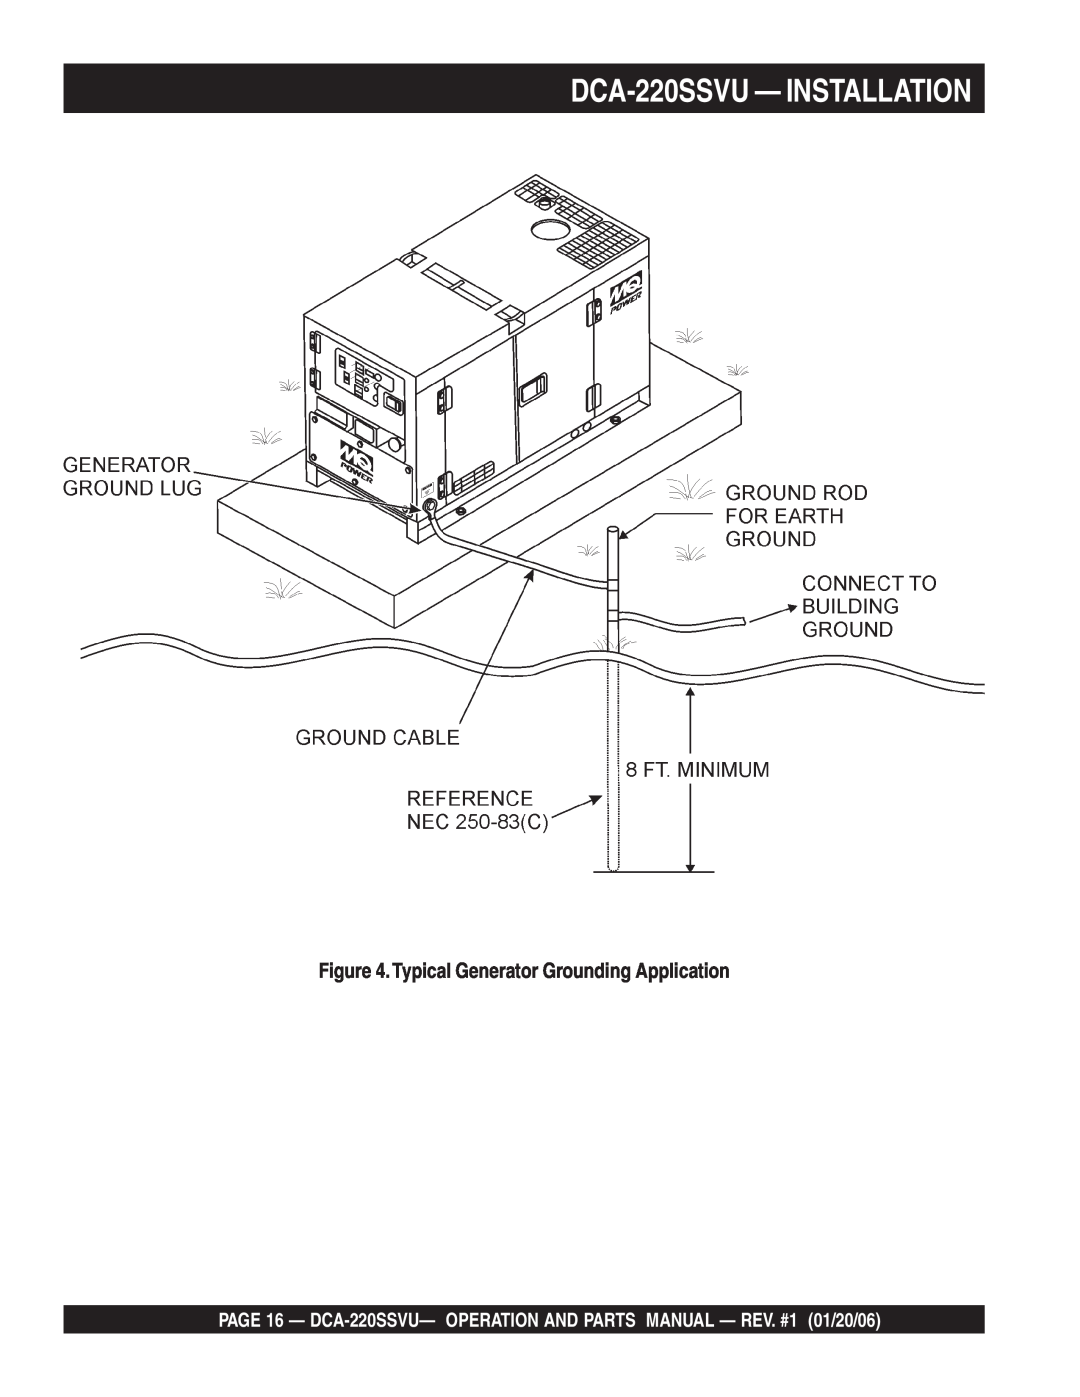 Multiquip operation manual DCA-220SSVU— INSTALLATION, Typical Generator Grounding Application 